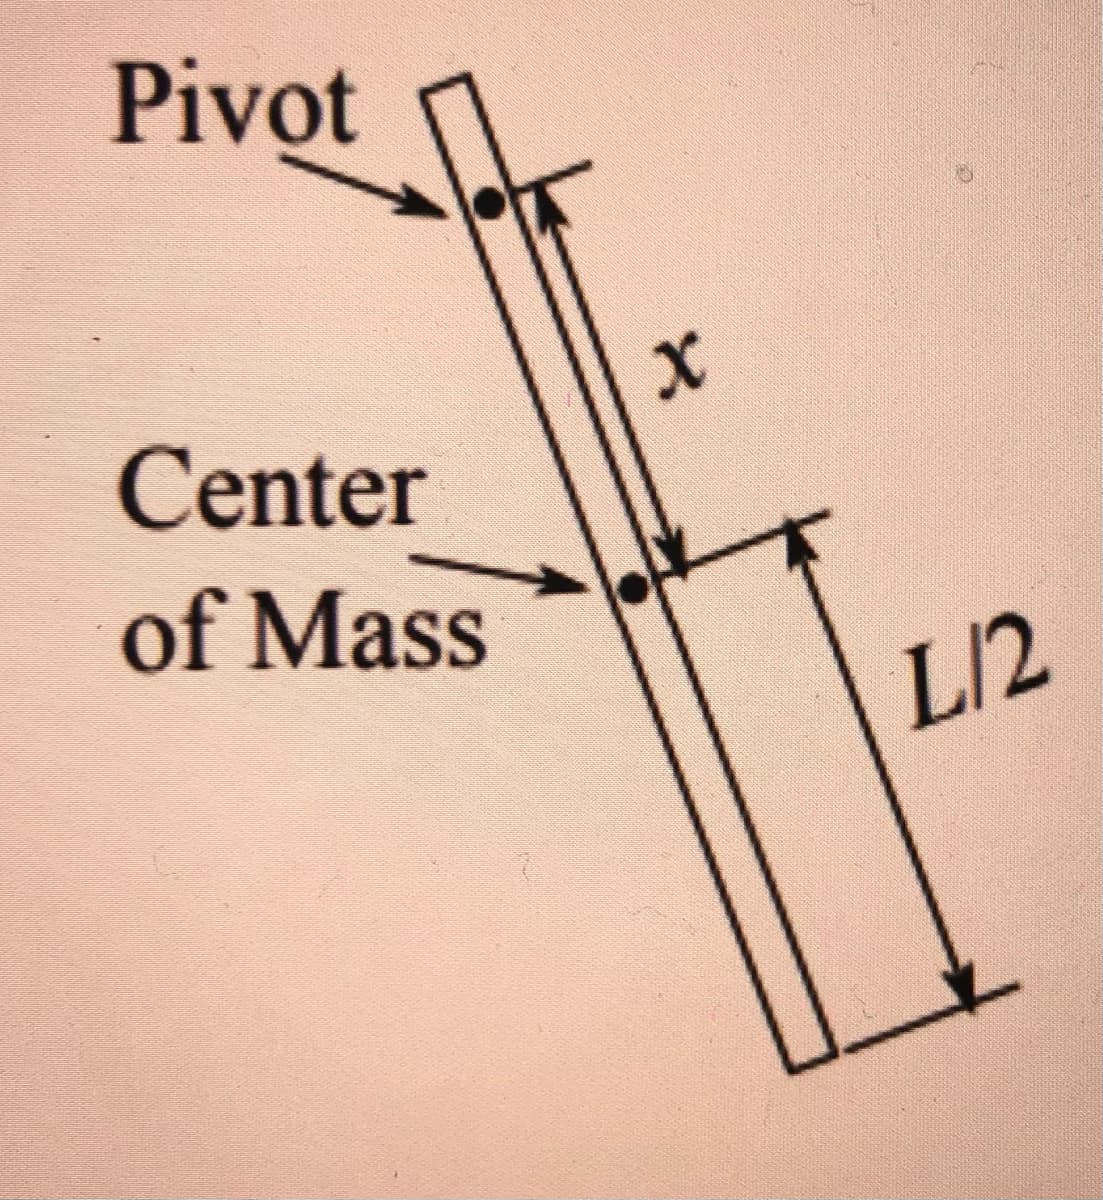 Pivot
Center
of Mass
L/2
